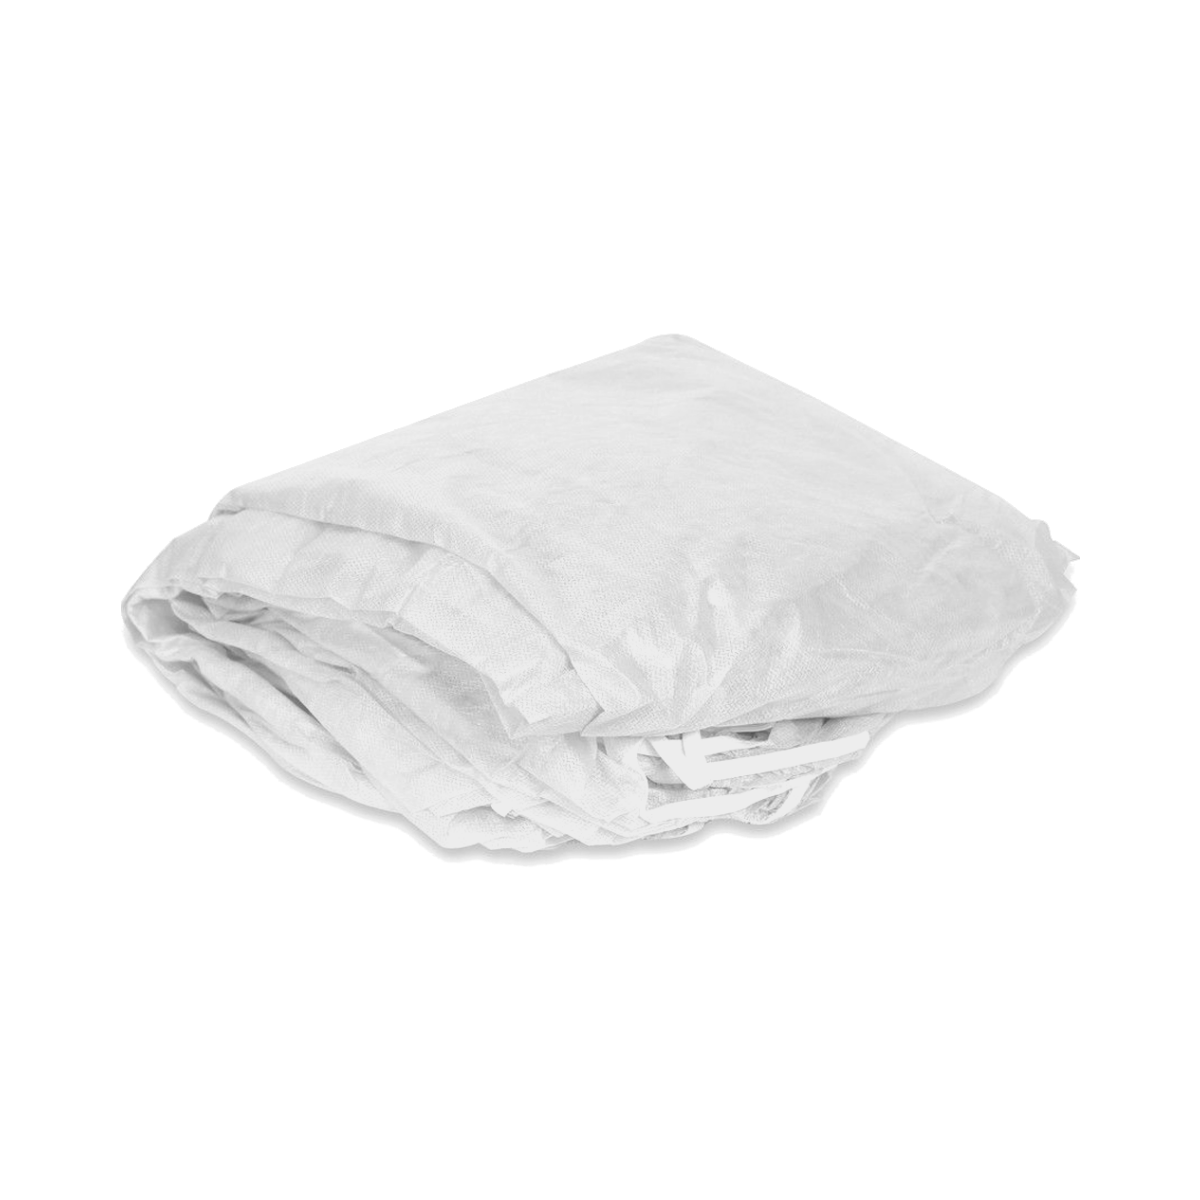 Чехол на Кушетку, спанбонд, на резинке, размер 210*90*15 см 10 шт. цвет: белый 